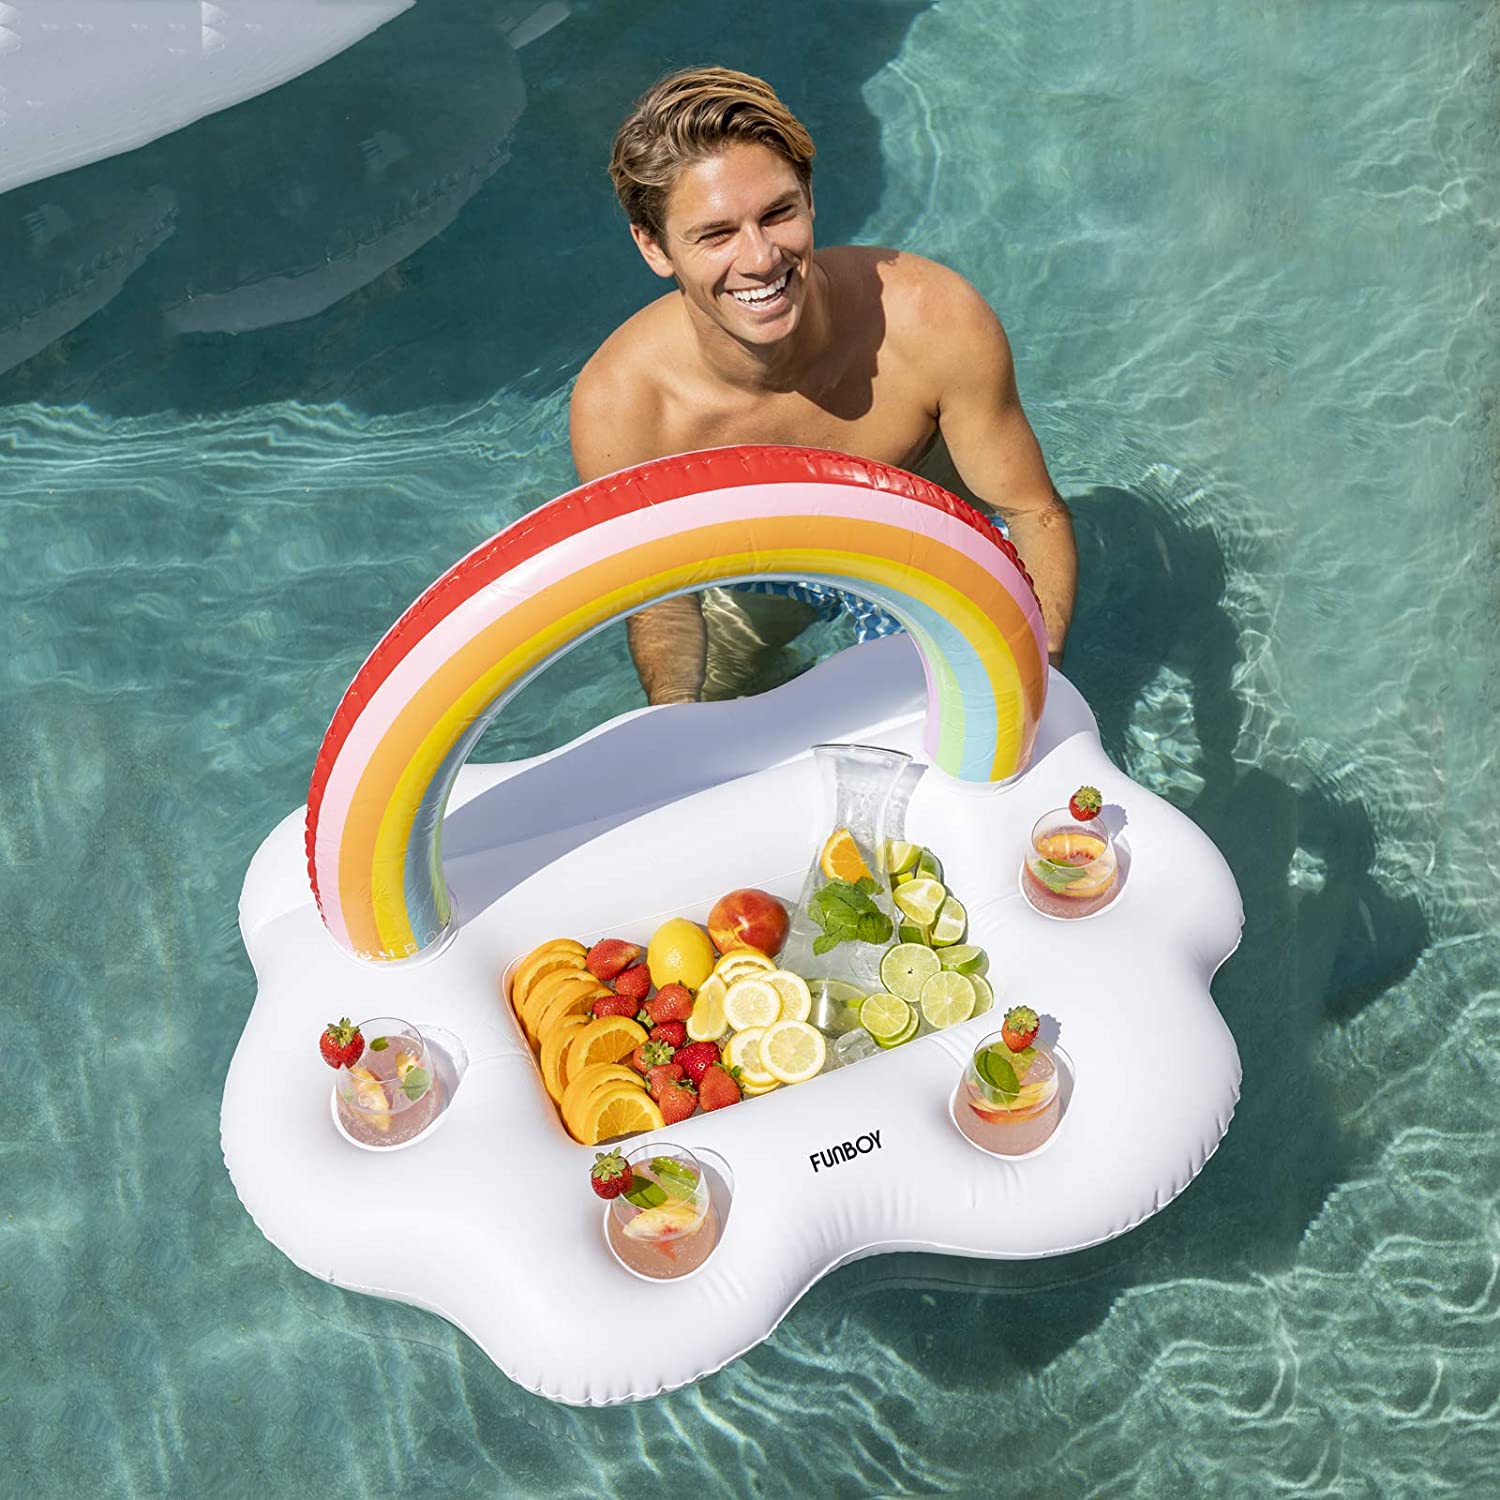 12 Inflatable Kiddie Voyage Swimming Pool Arm Floats Set of 2